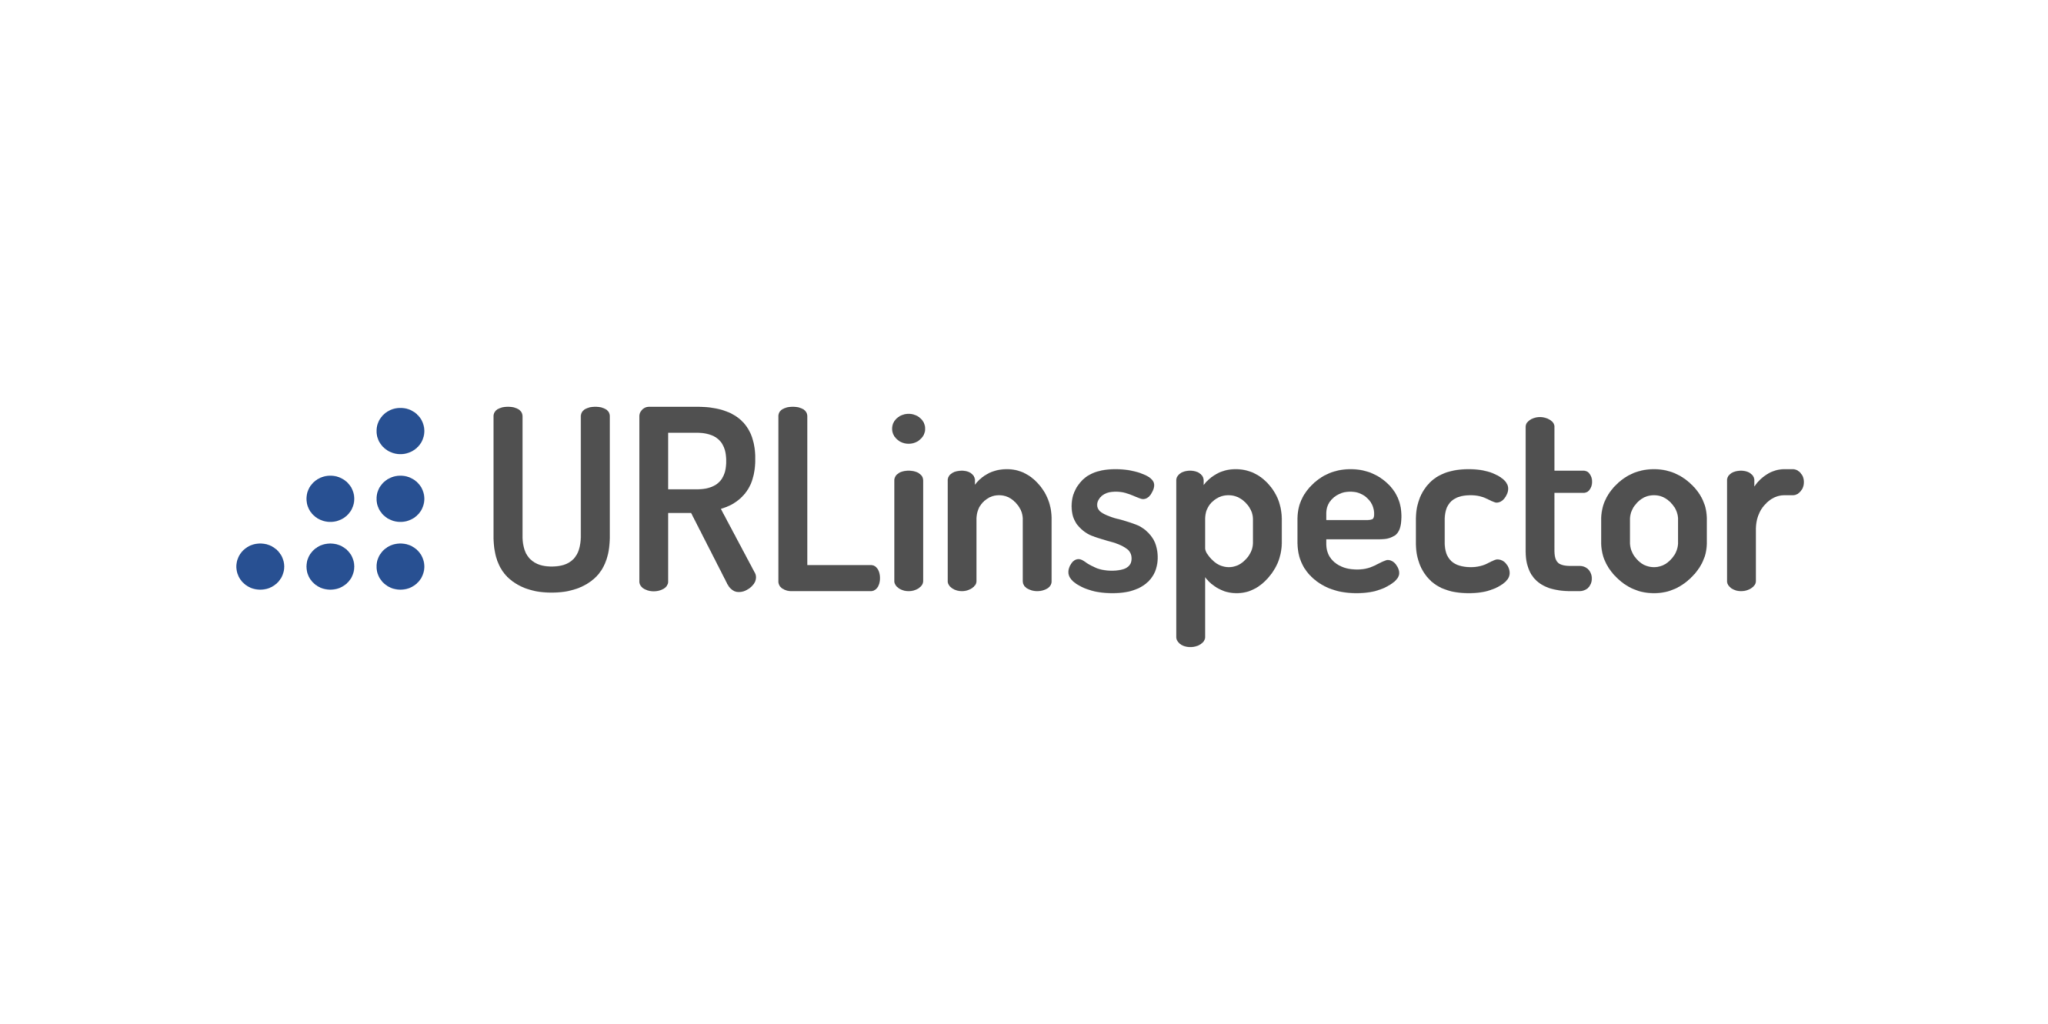 (c) Urlinspector.com